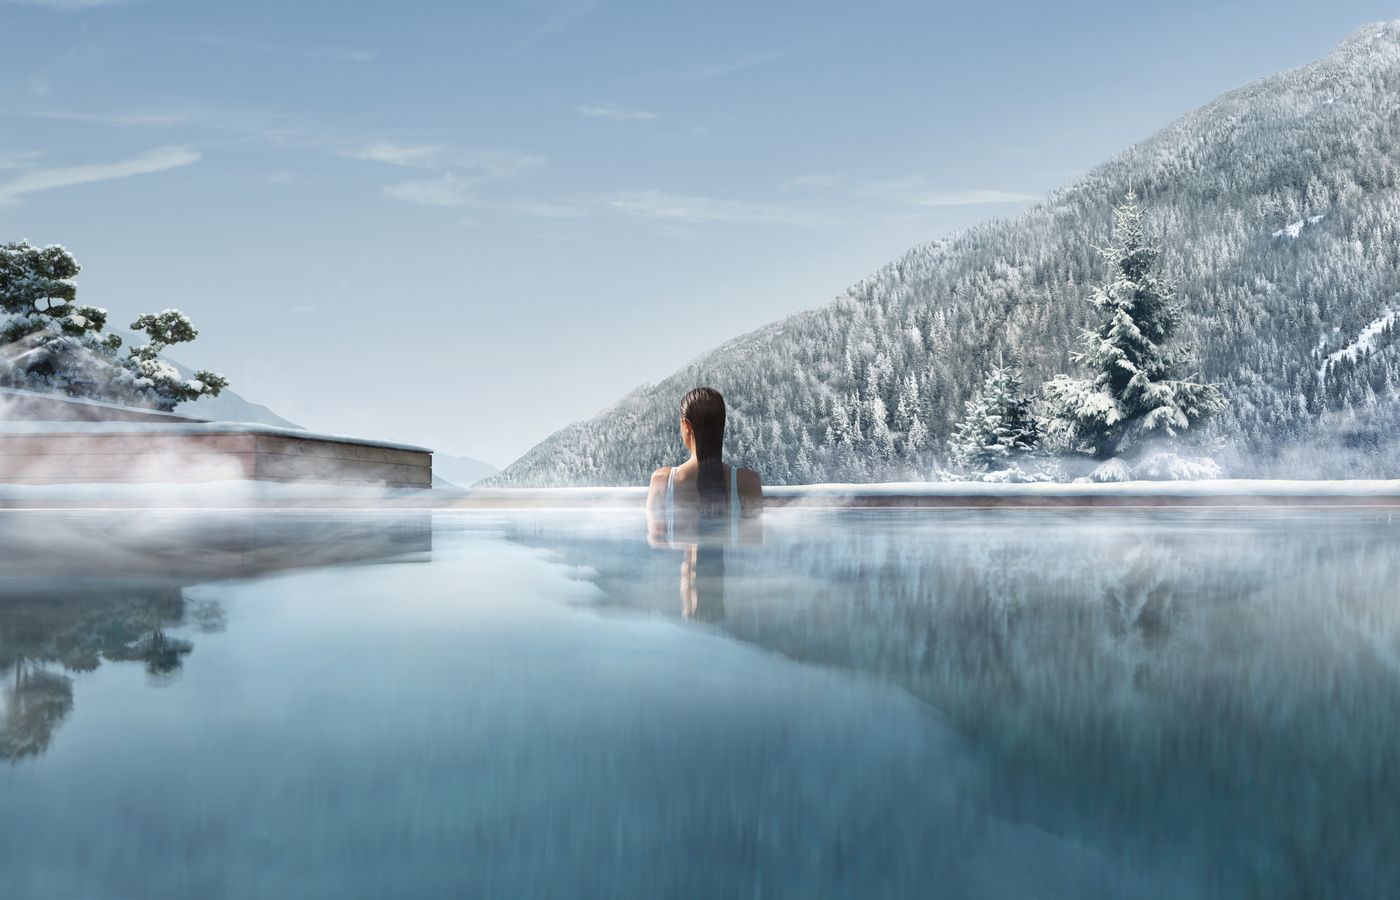 Trip La Graciosa - FitReisen - Lefay Resort & Spa Dolomiti in Pinzolo buche jetzt Deinen Wellness & Beauty Urlaub im Lefay Resort & Spa Dolomiti in der Region Südtirol, in Italien günstig bei uns!